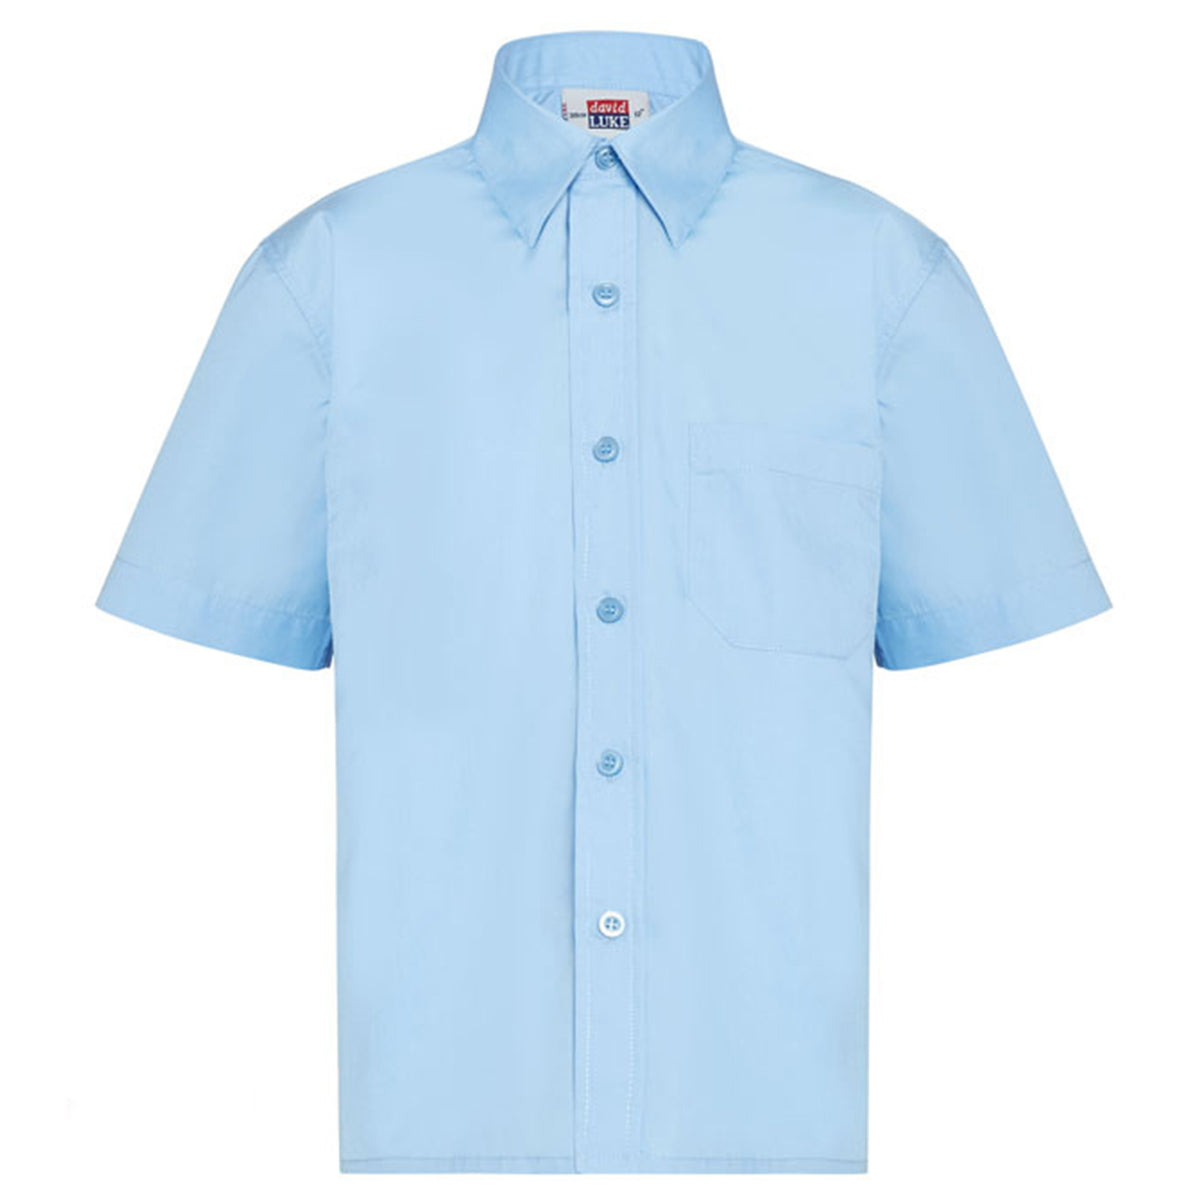 Boys Short Sleeve Shirt (Twin Pack): Blue